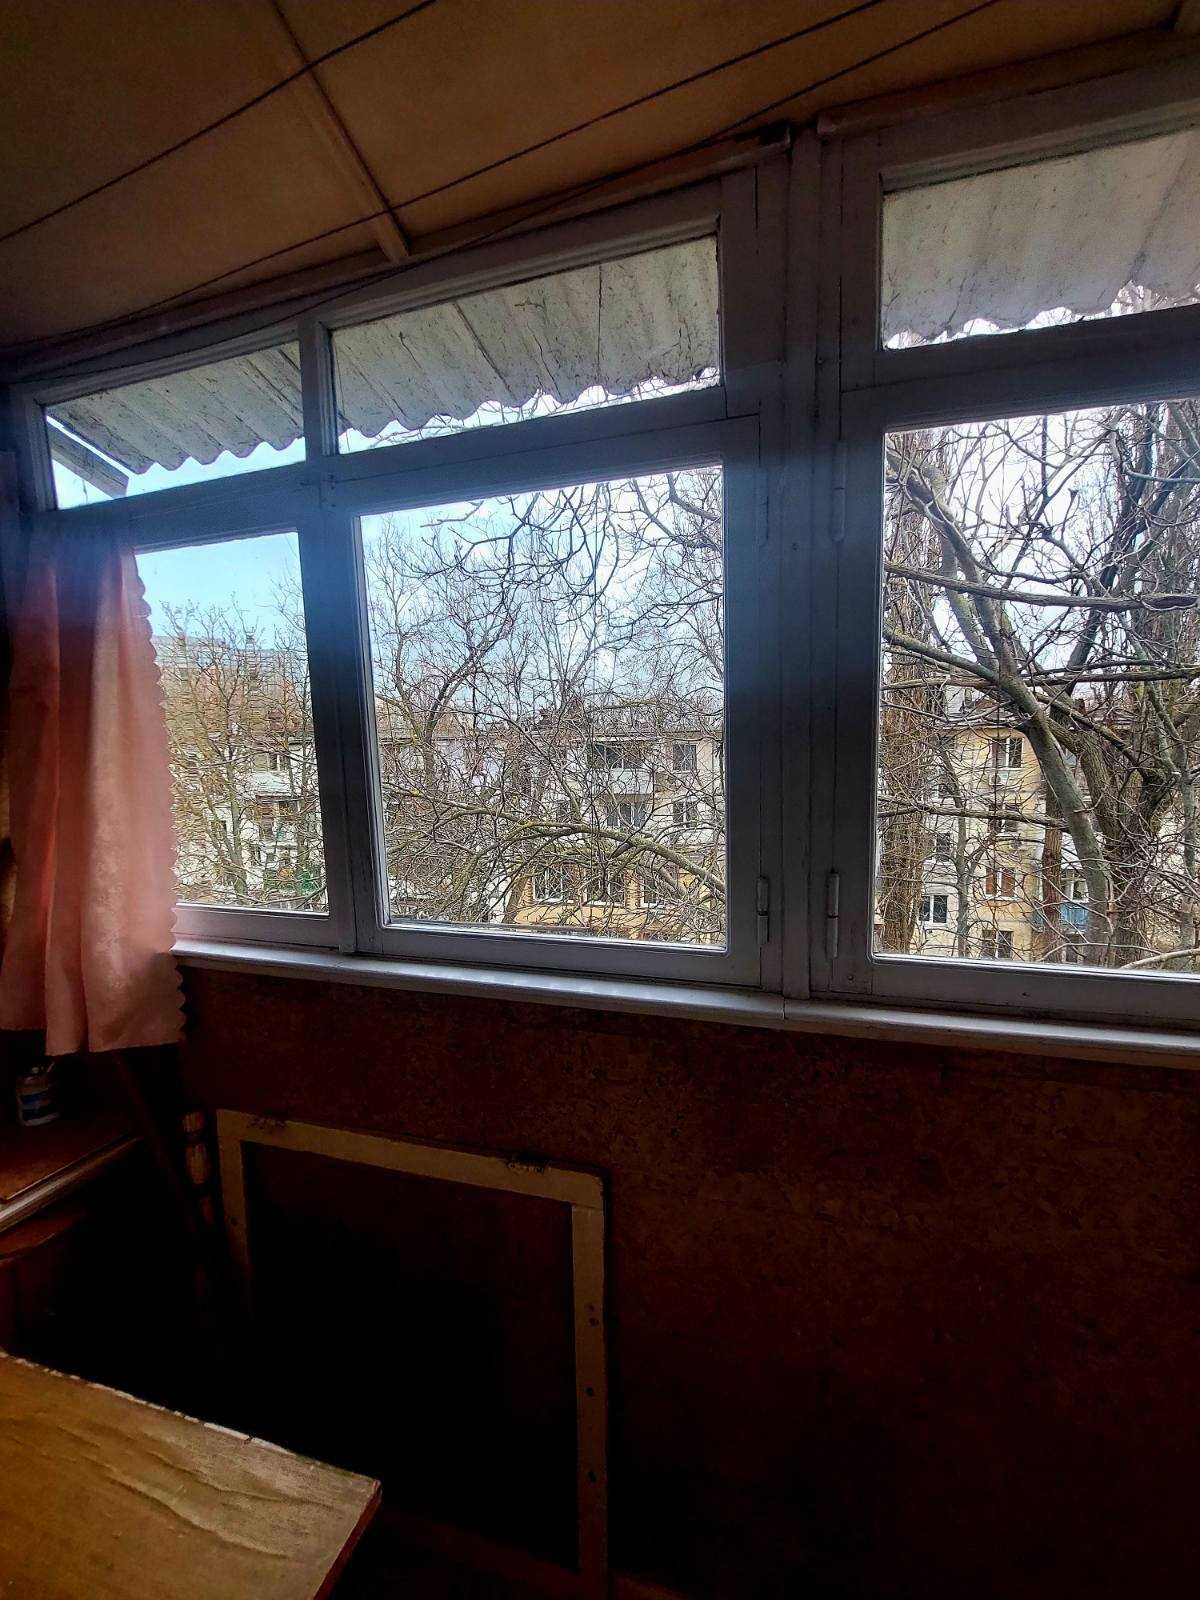 Продам квартиру  по ул. Терешковой , парк Горького напротив